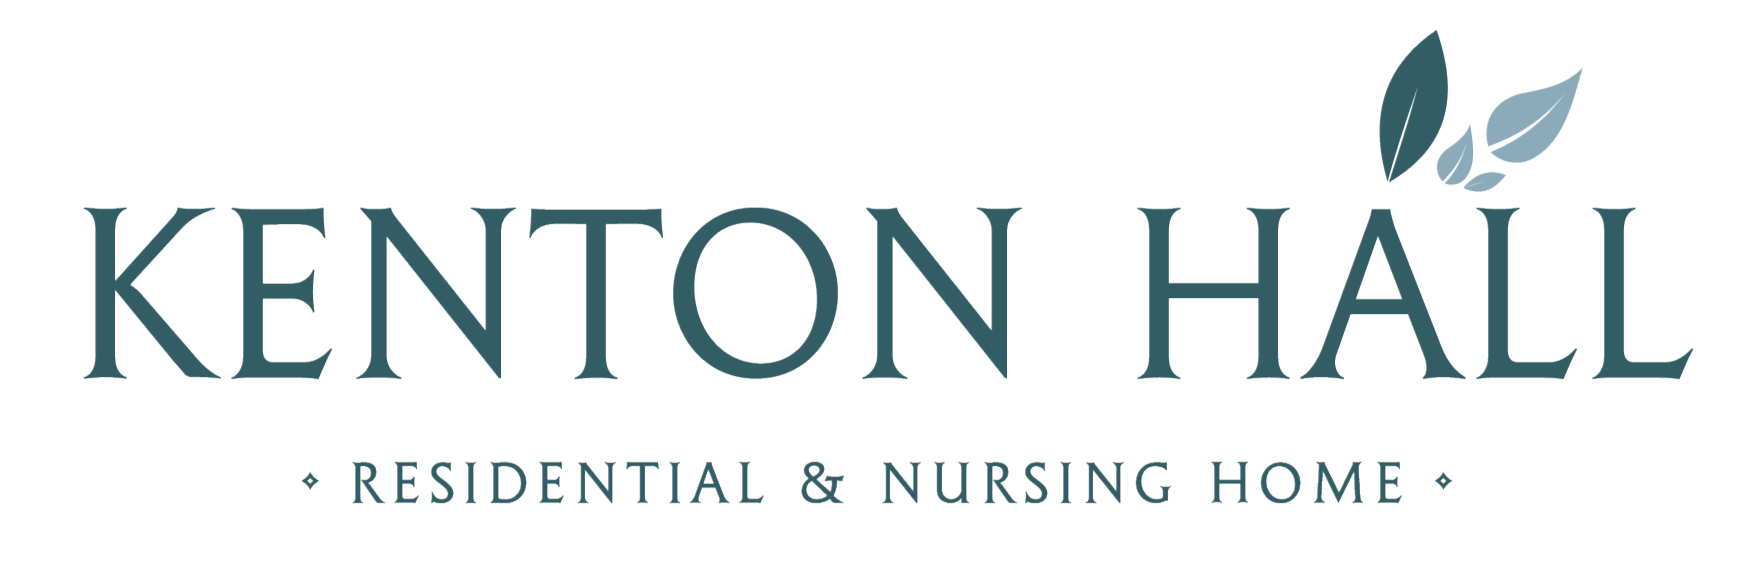 Kenton Hall Care Home logo